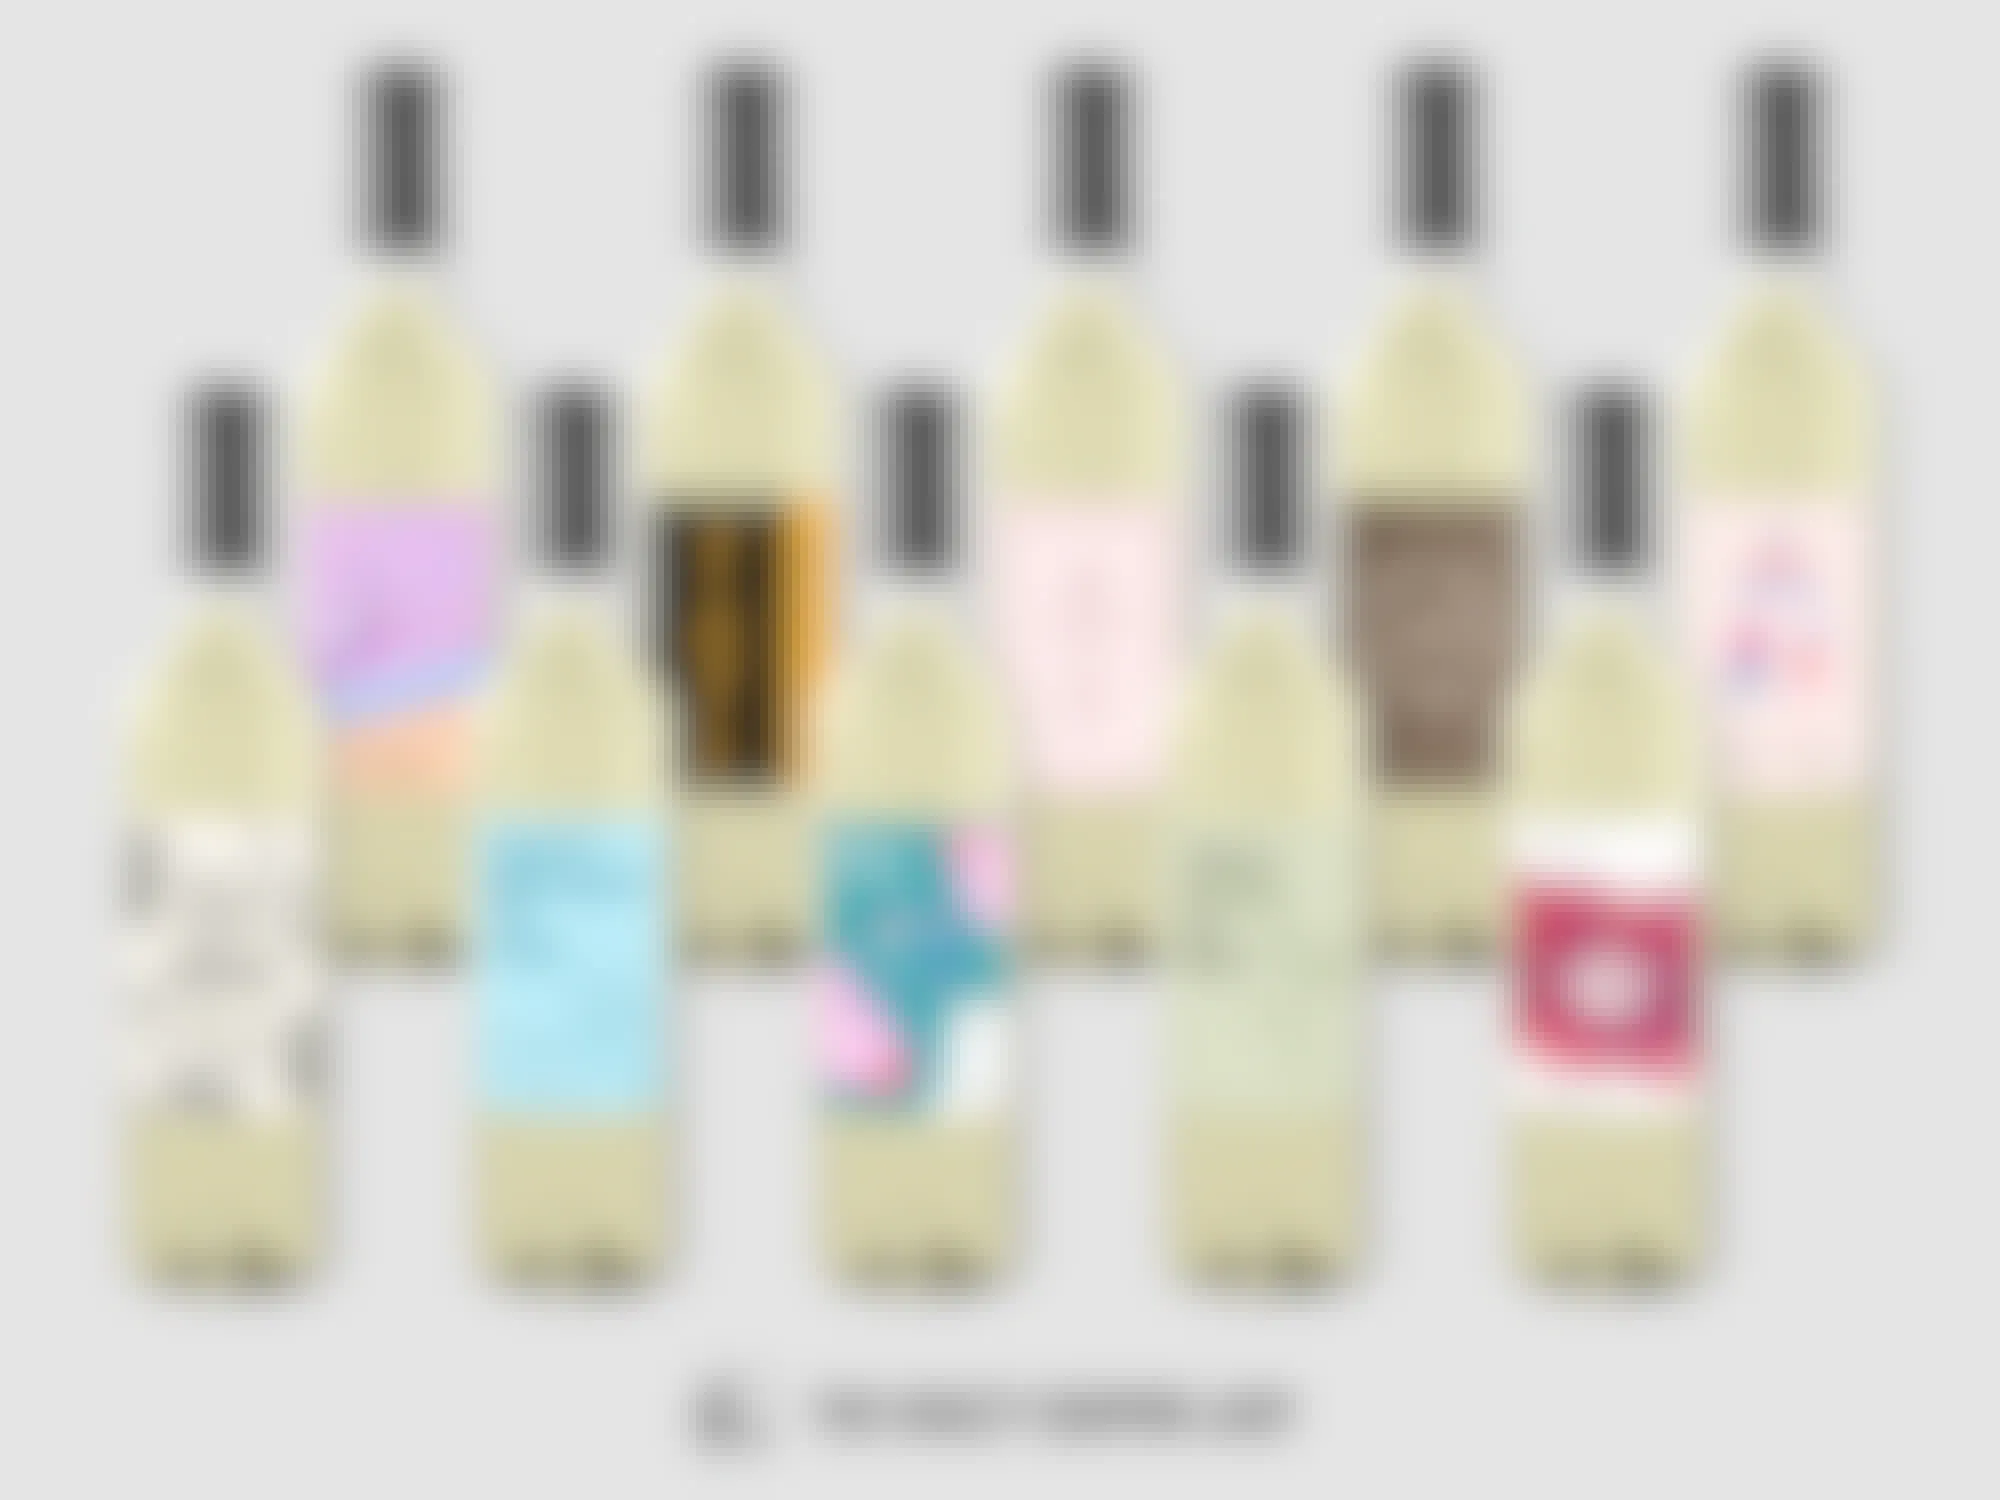 10 free printable wine labels on bottles